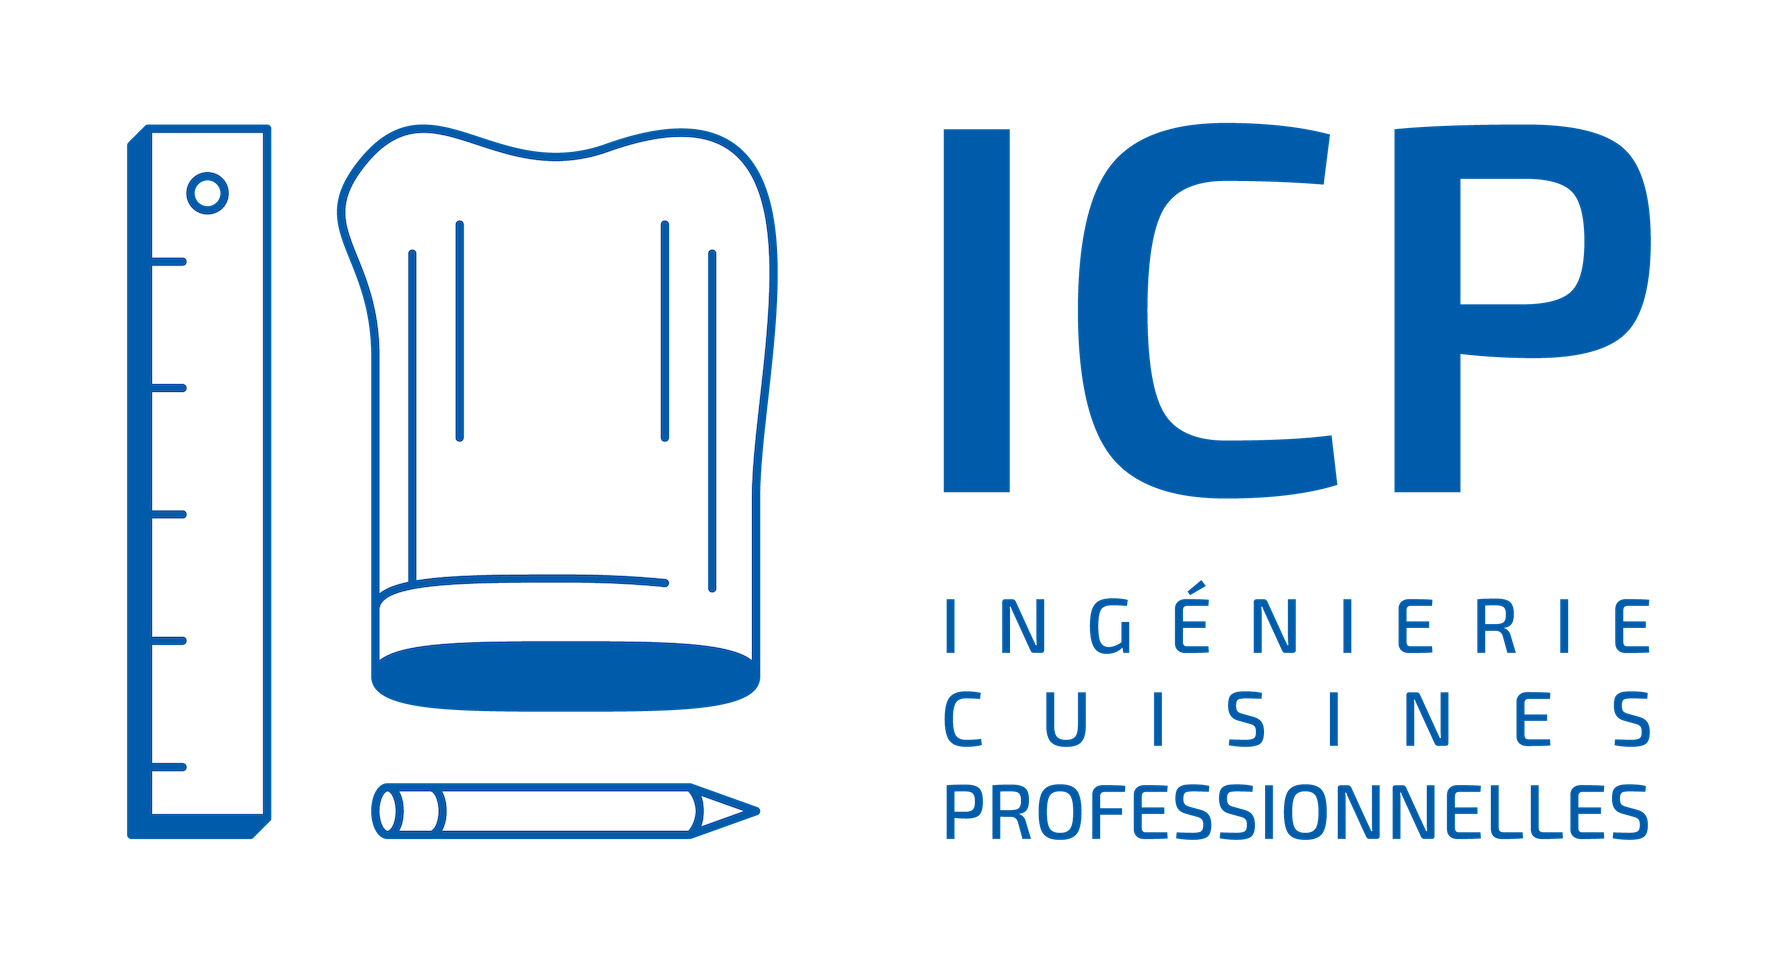 Logo ICP